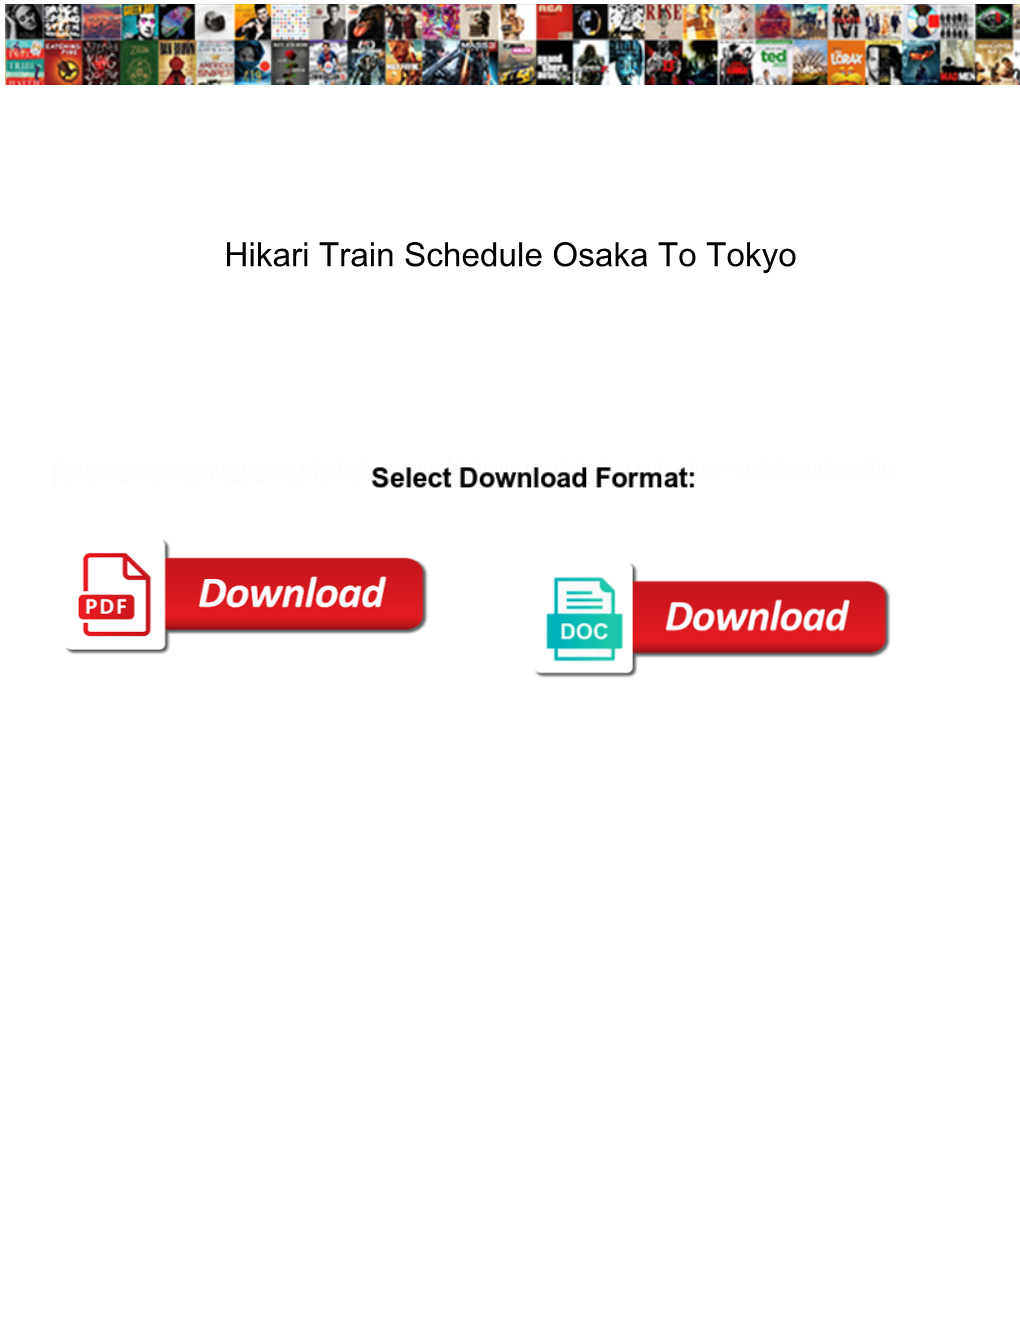 Hikari Train Schedule Osaka to Tokyo